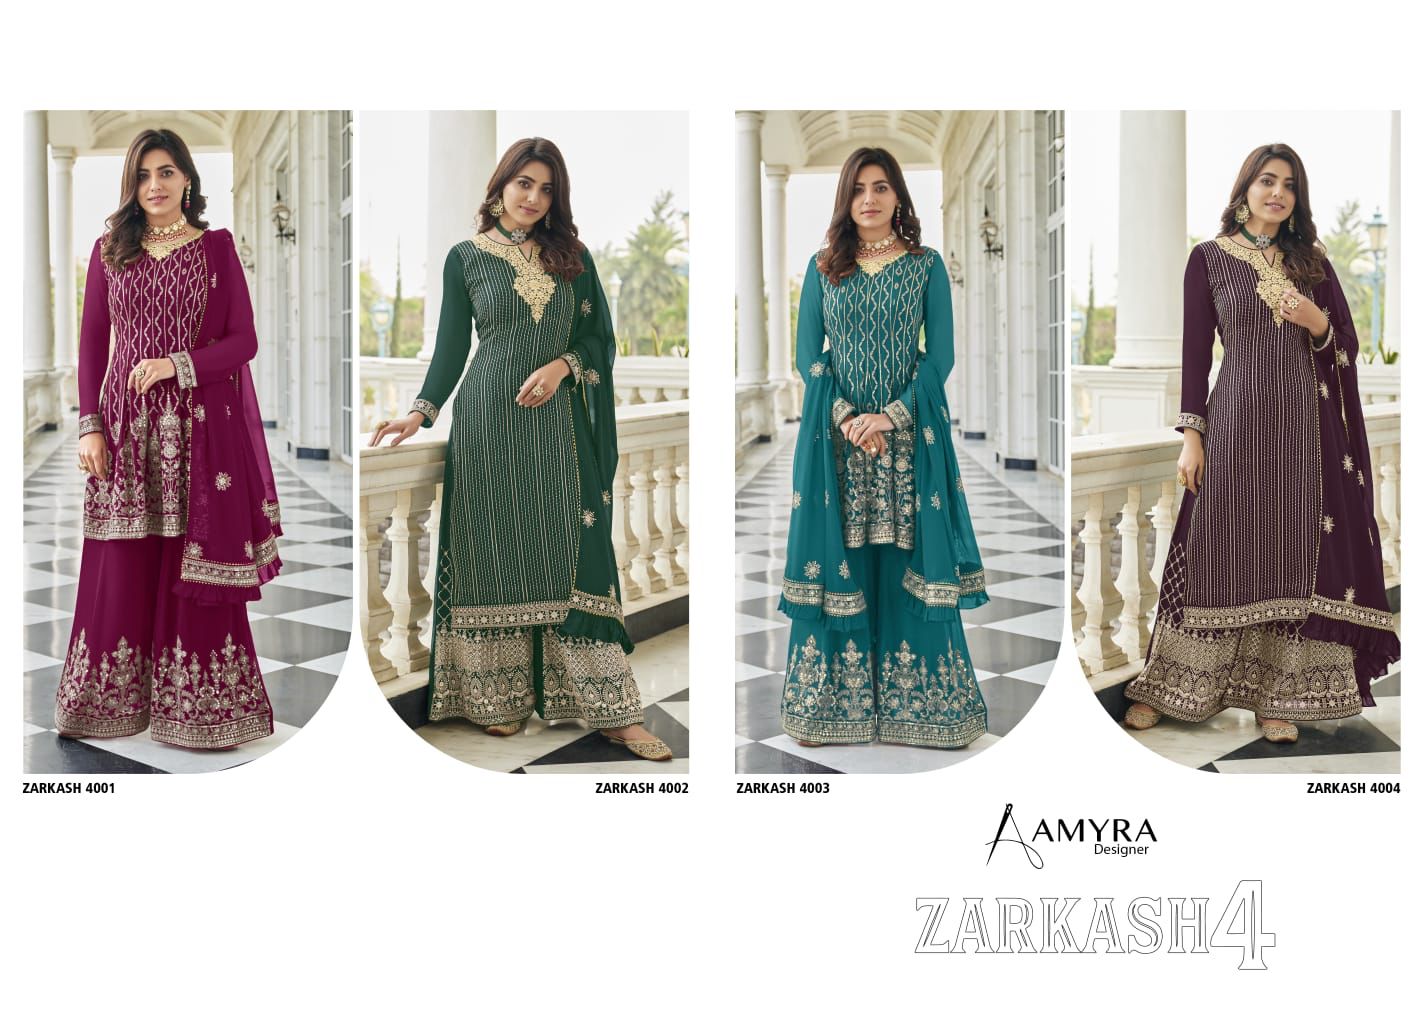 Aamyra Designer Zarkash 4001-4004